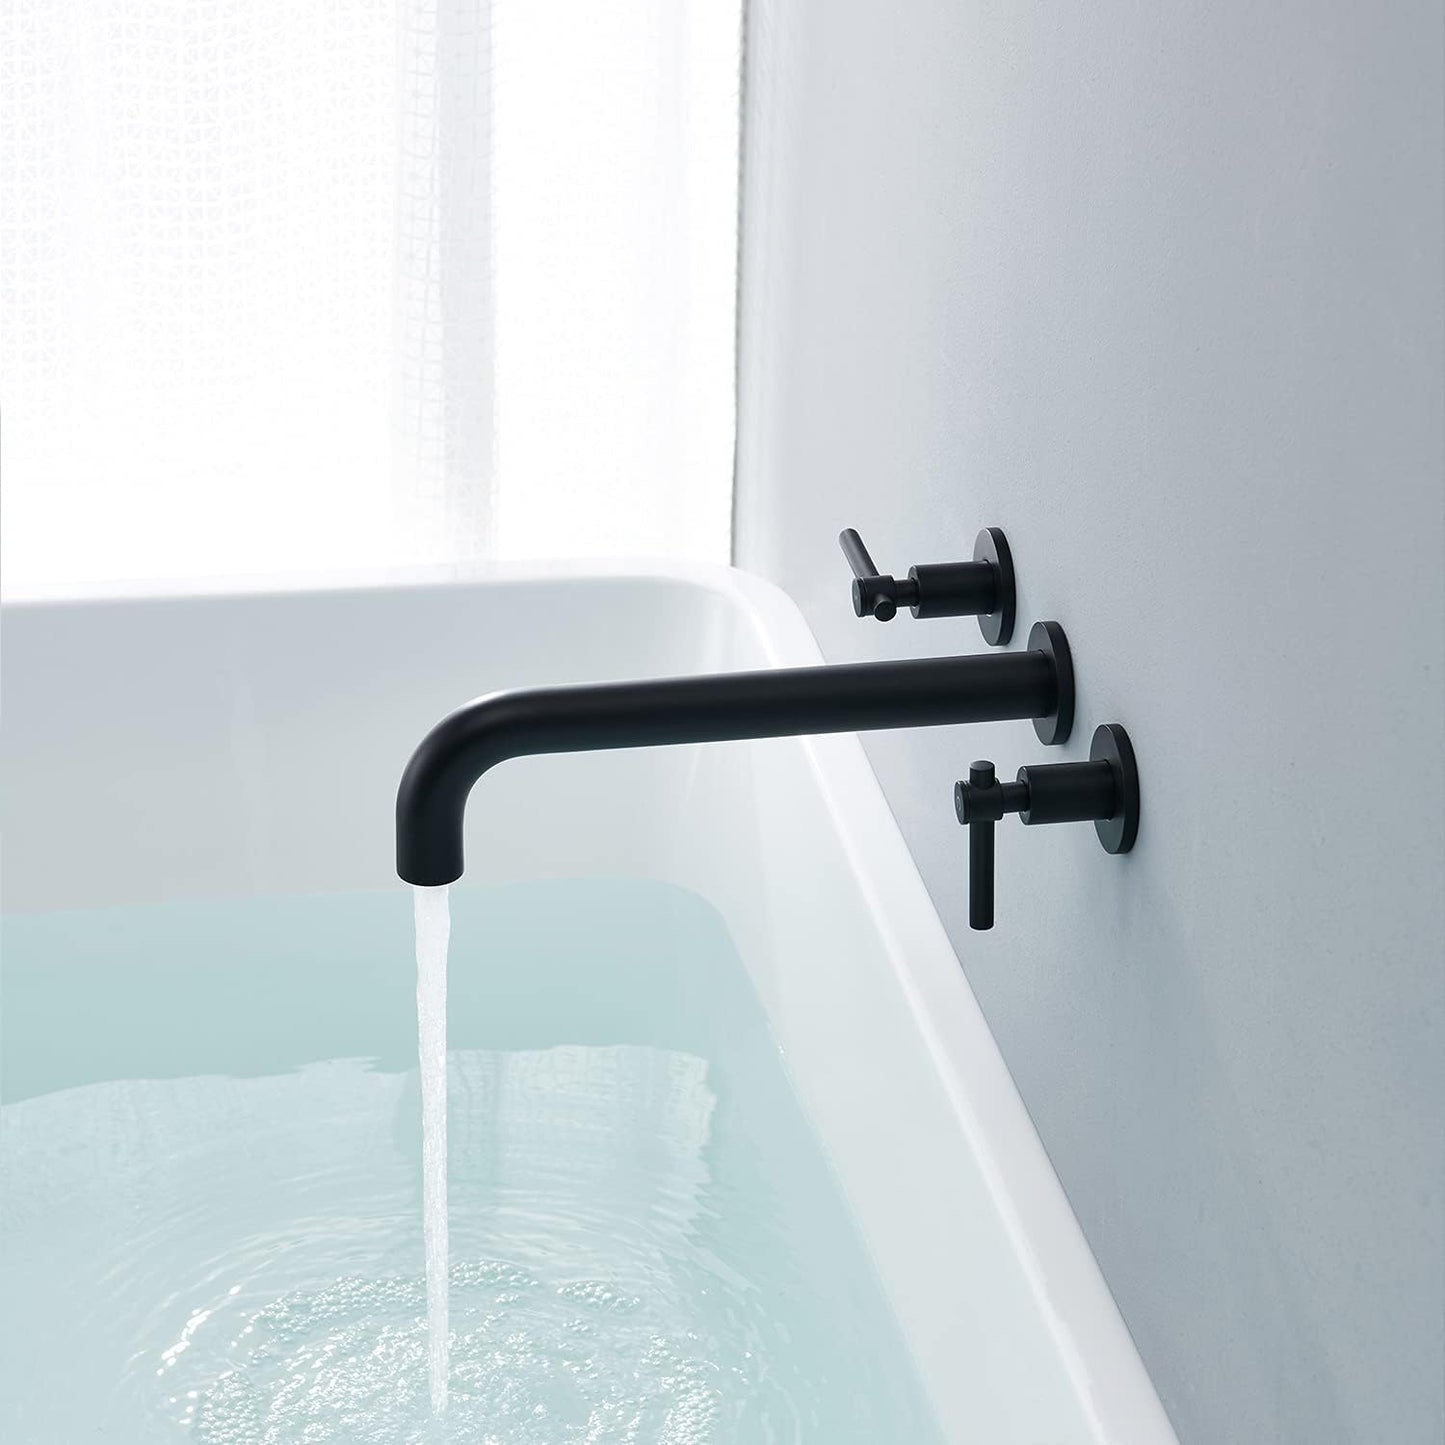 Wowkk Tub Filler Wall Mount Tub Faucet Black Brass Bathroom Bathtub Faucets with 2 Handles (Black)